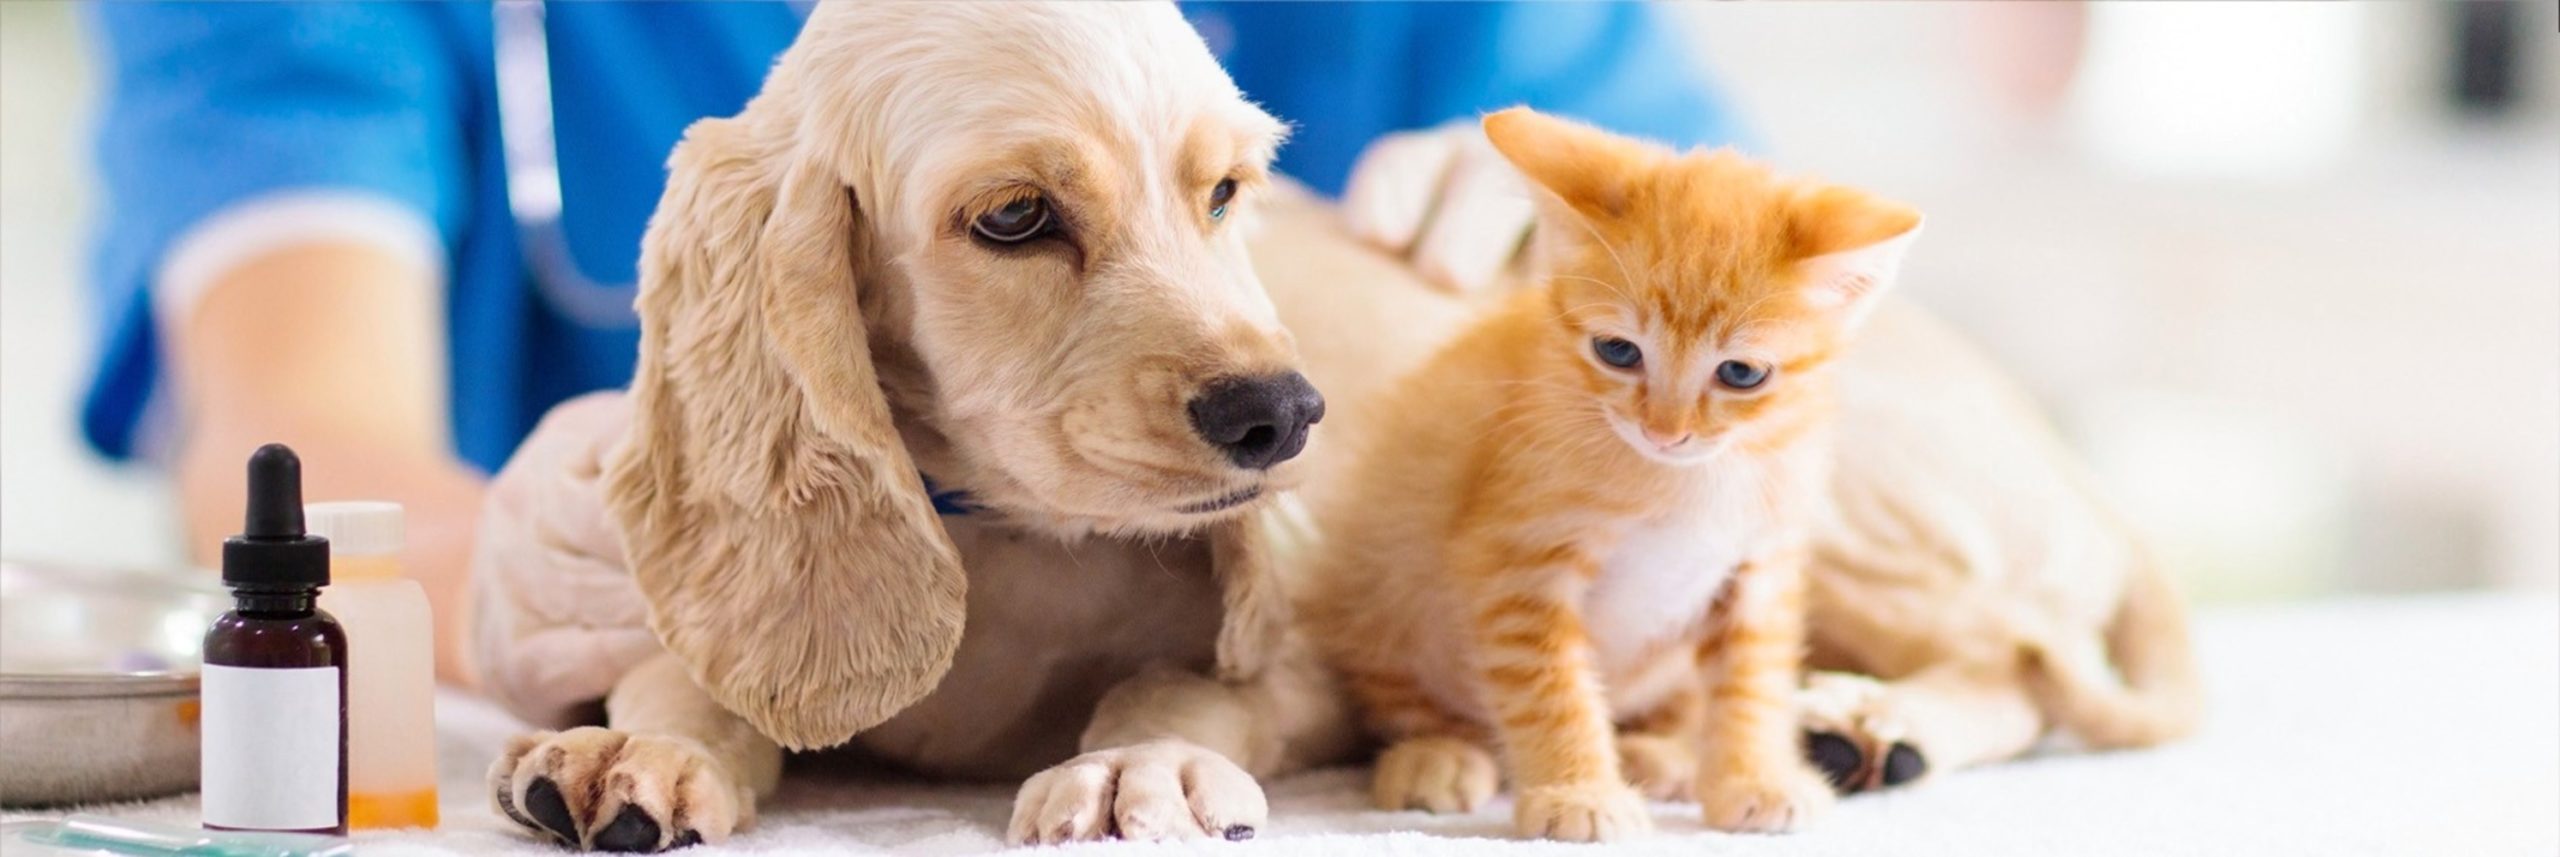 dog and cat vet banner